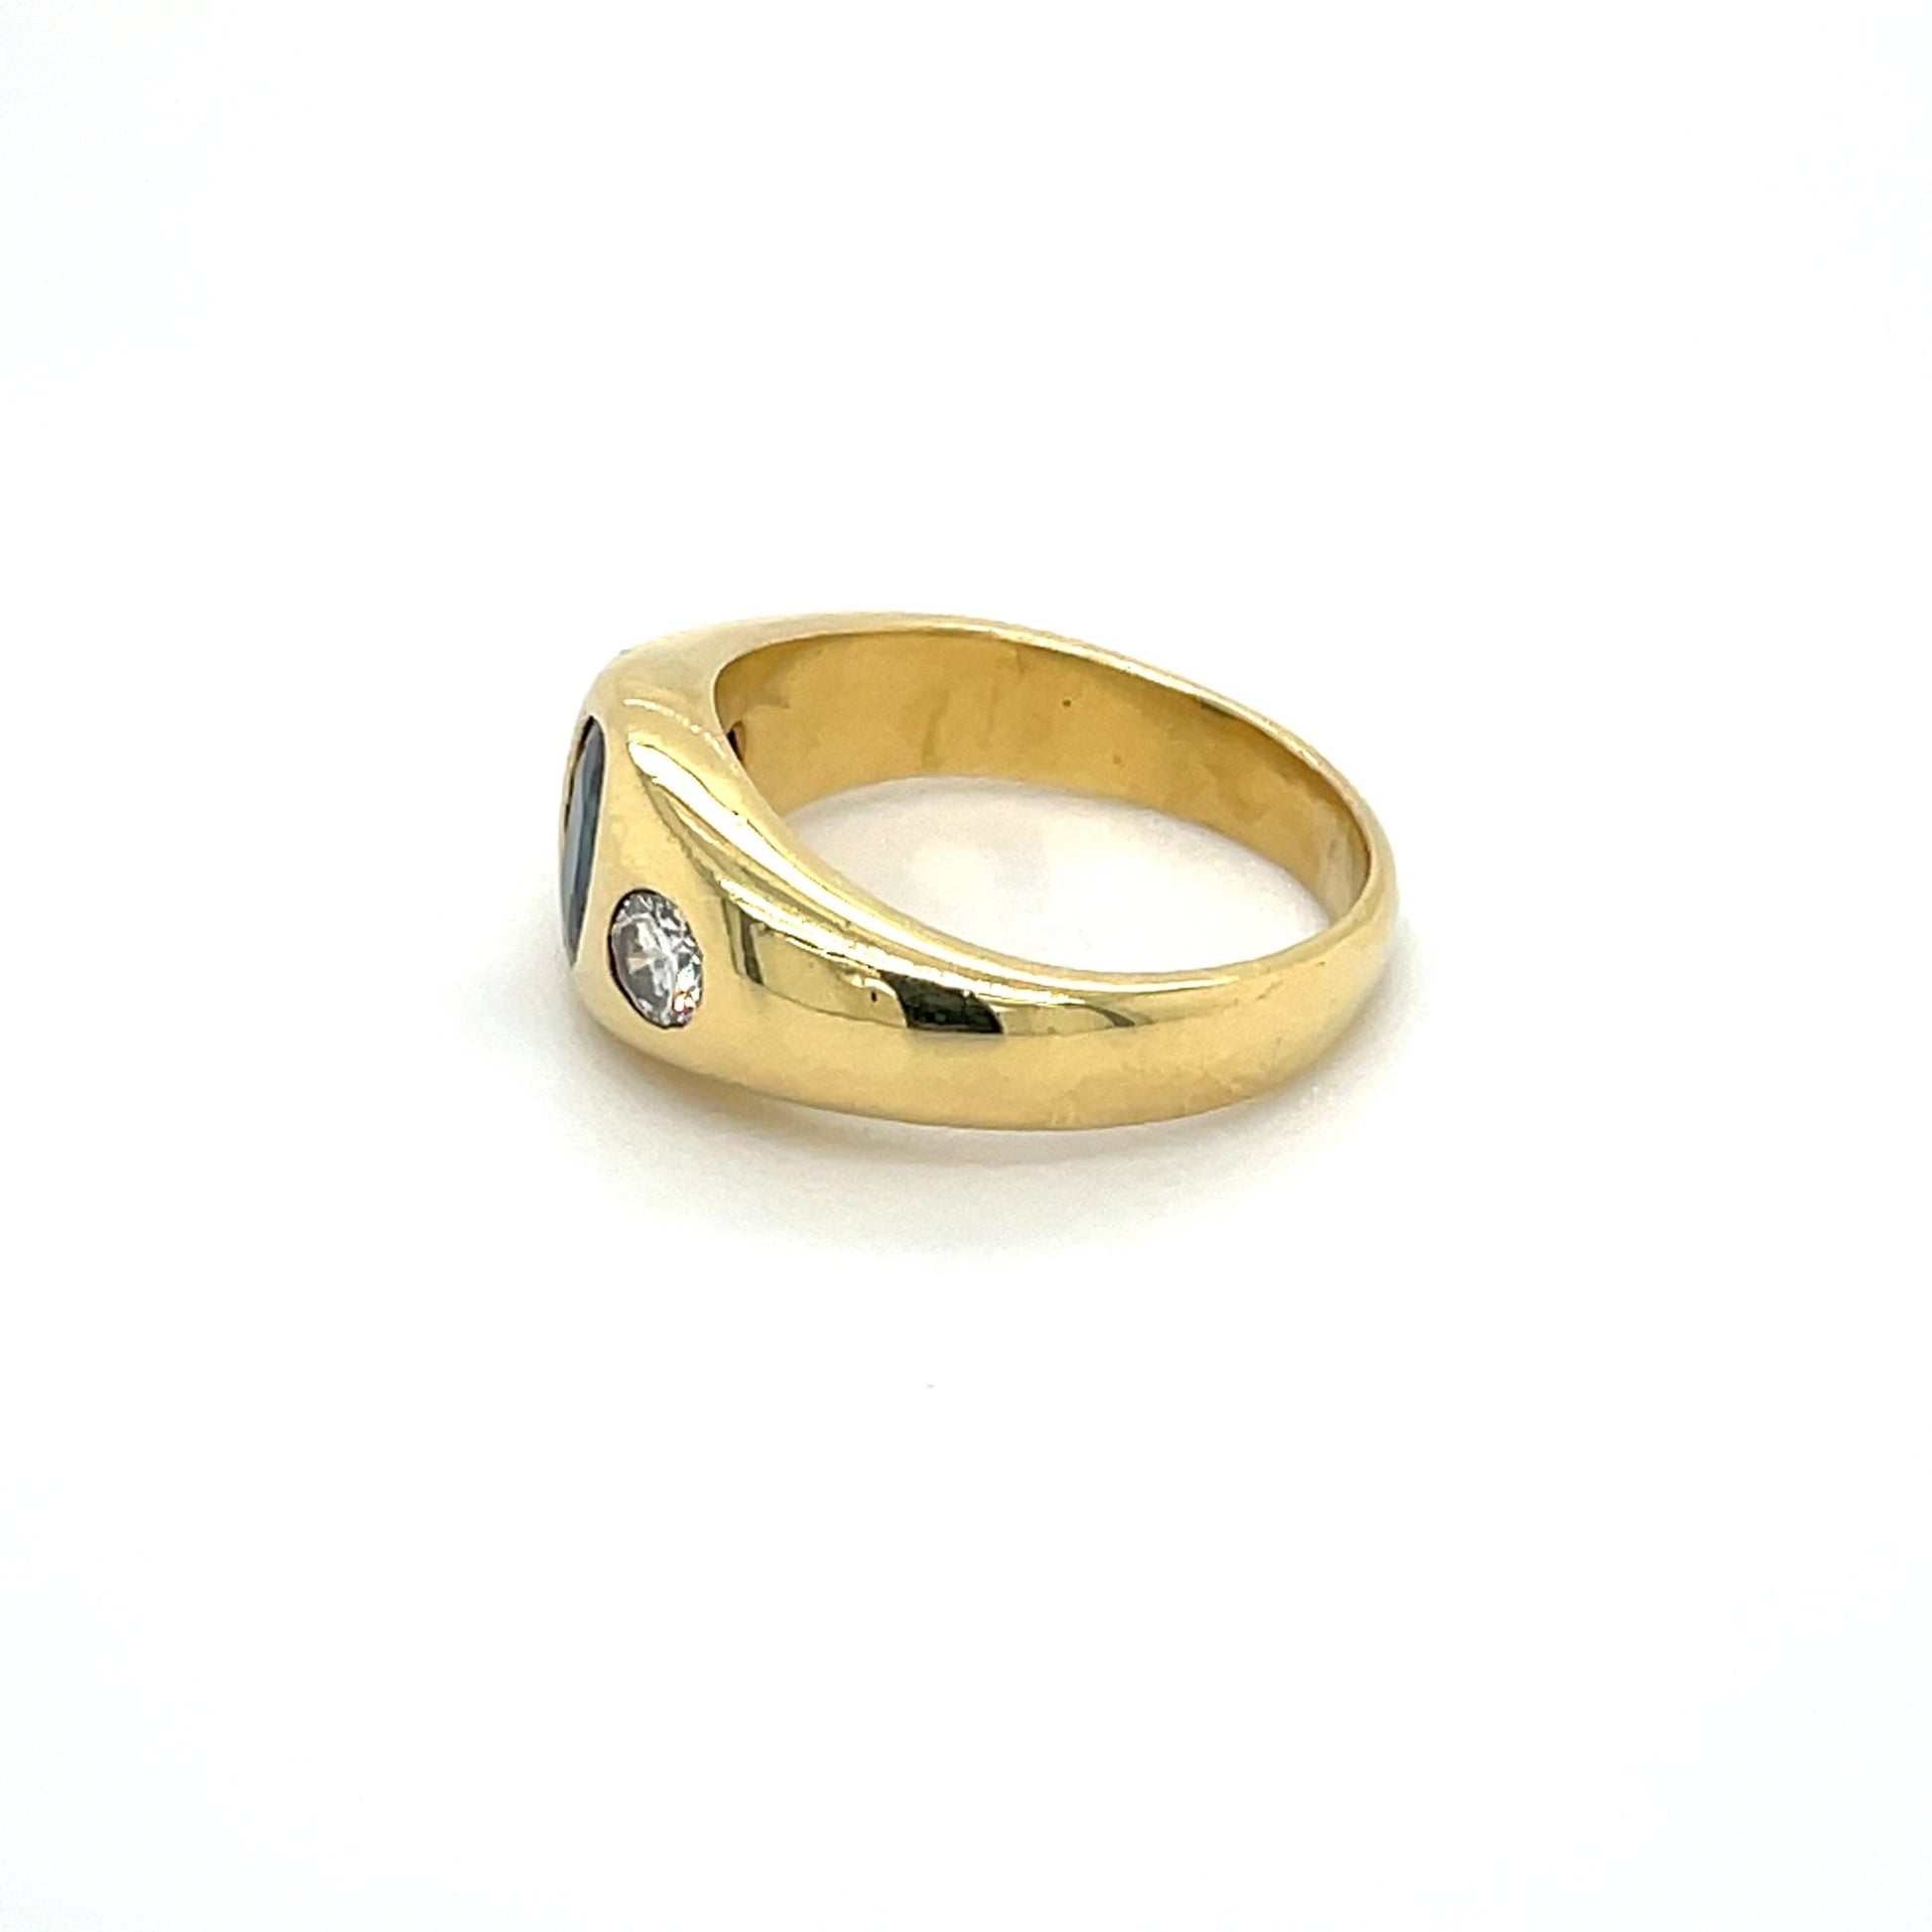 Ring mit 1 Saphir & 2 Brillanten in Gold 750 - JUWEL1